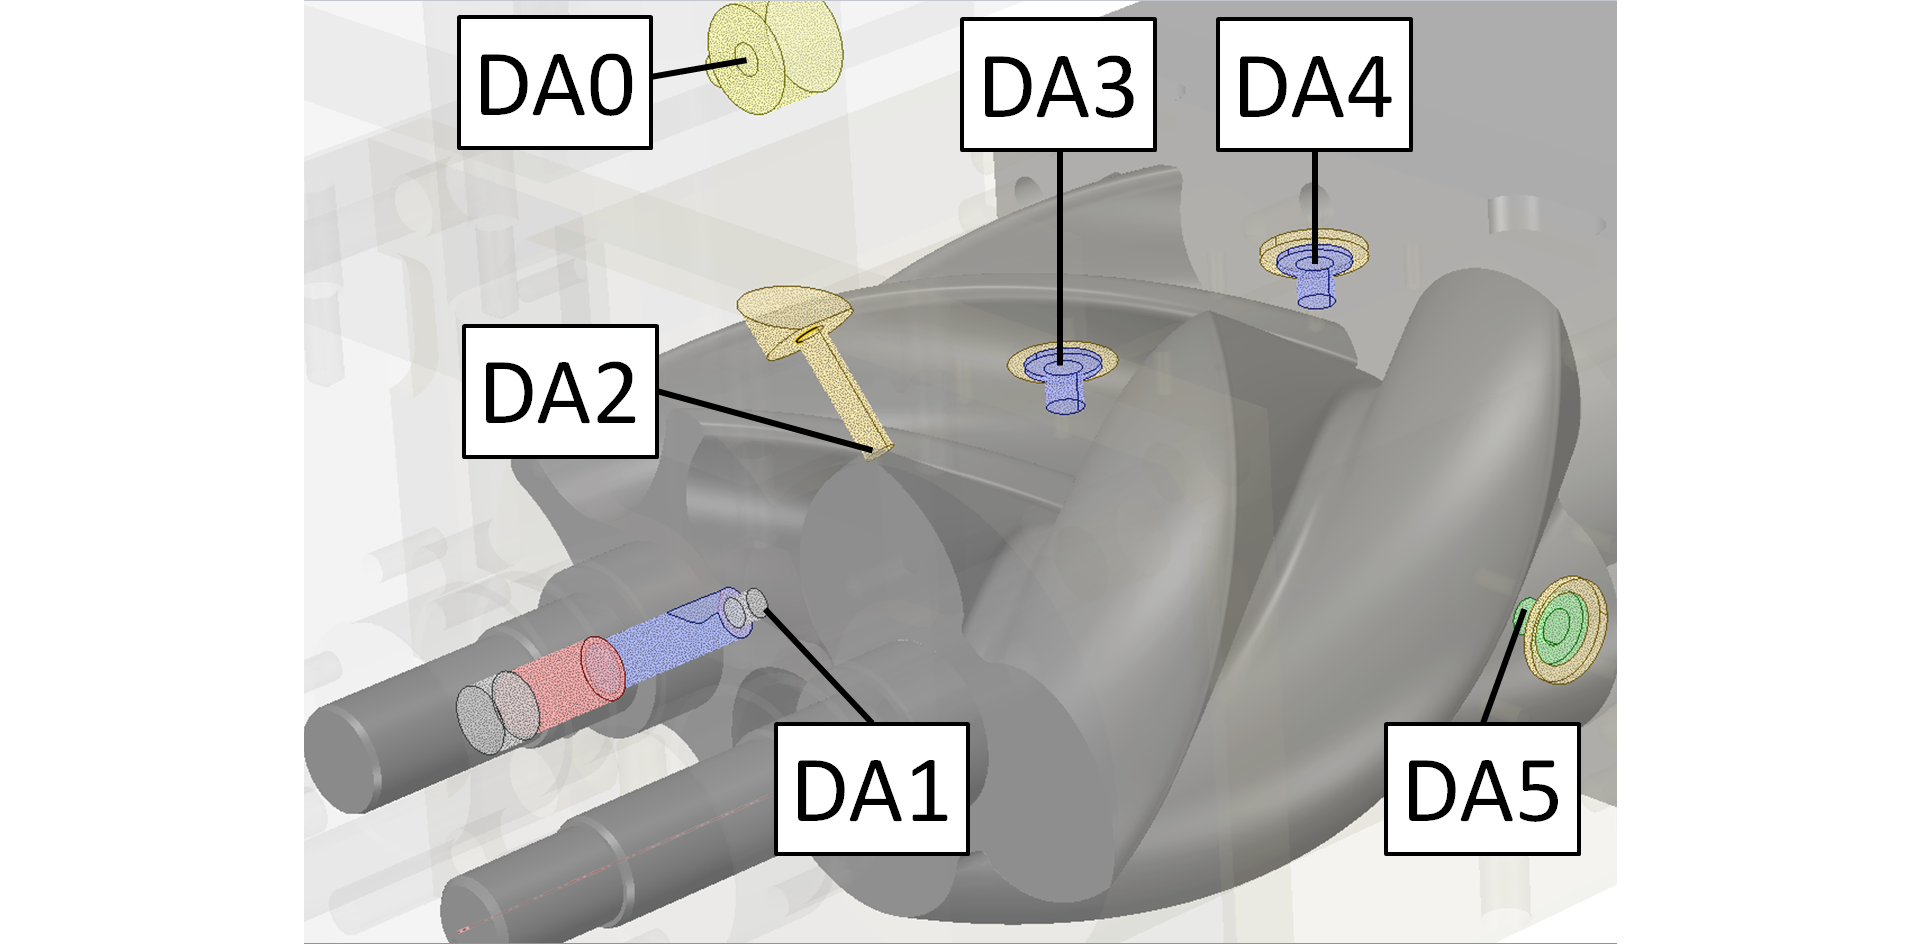 CAD Model of the Screw Expander Including Pressure Measurement Points